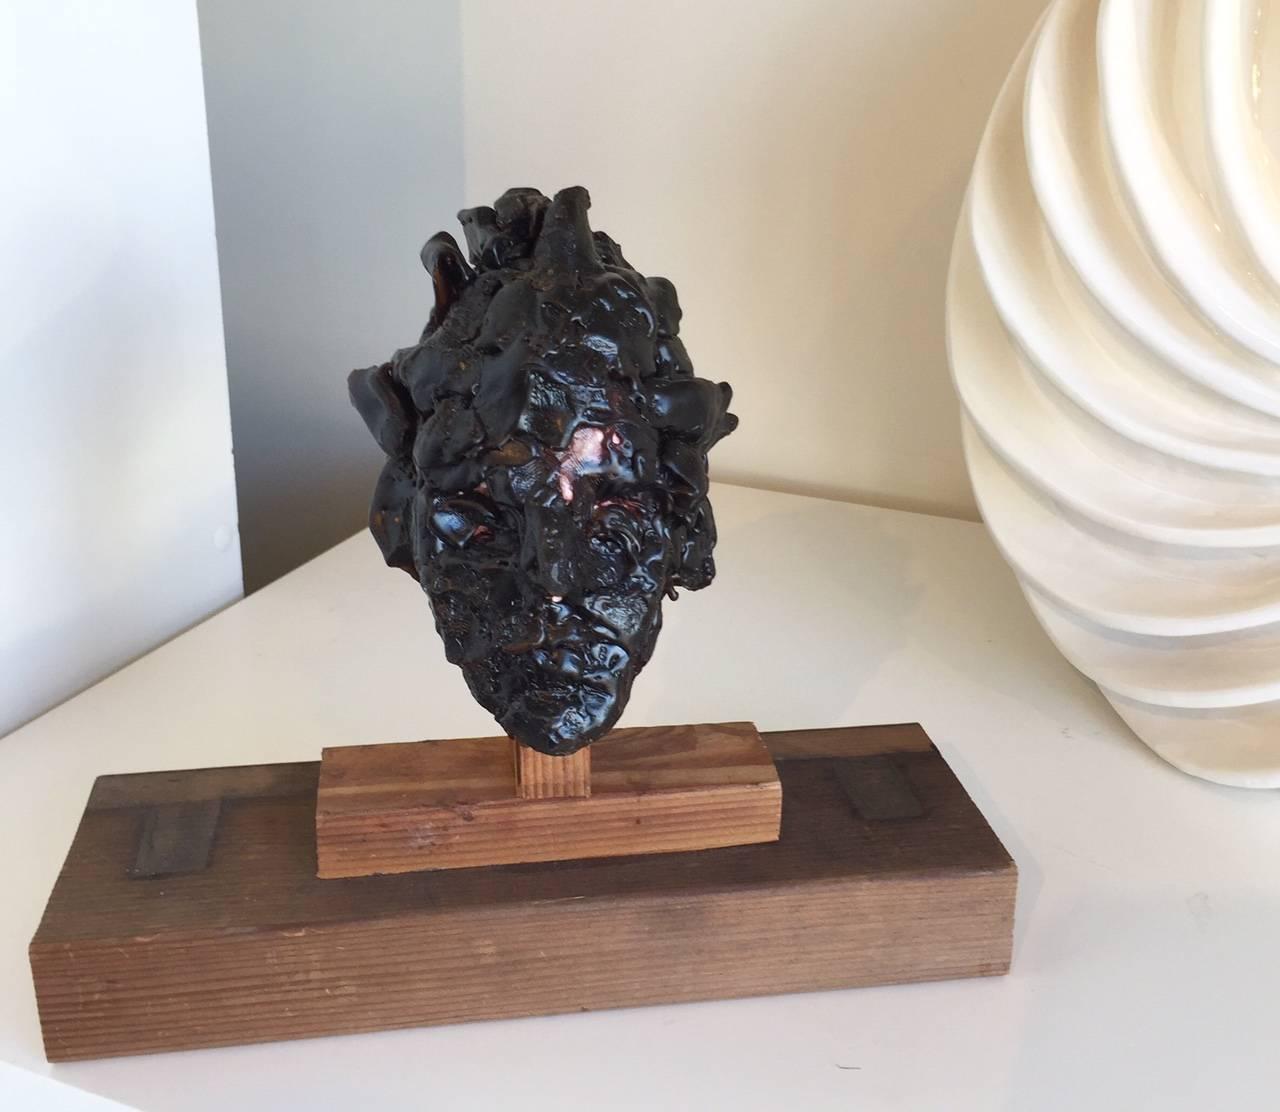 Bust / Head No. 1 2014 - Brown Figurative Sculpture by John Goodman